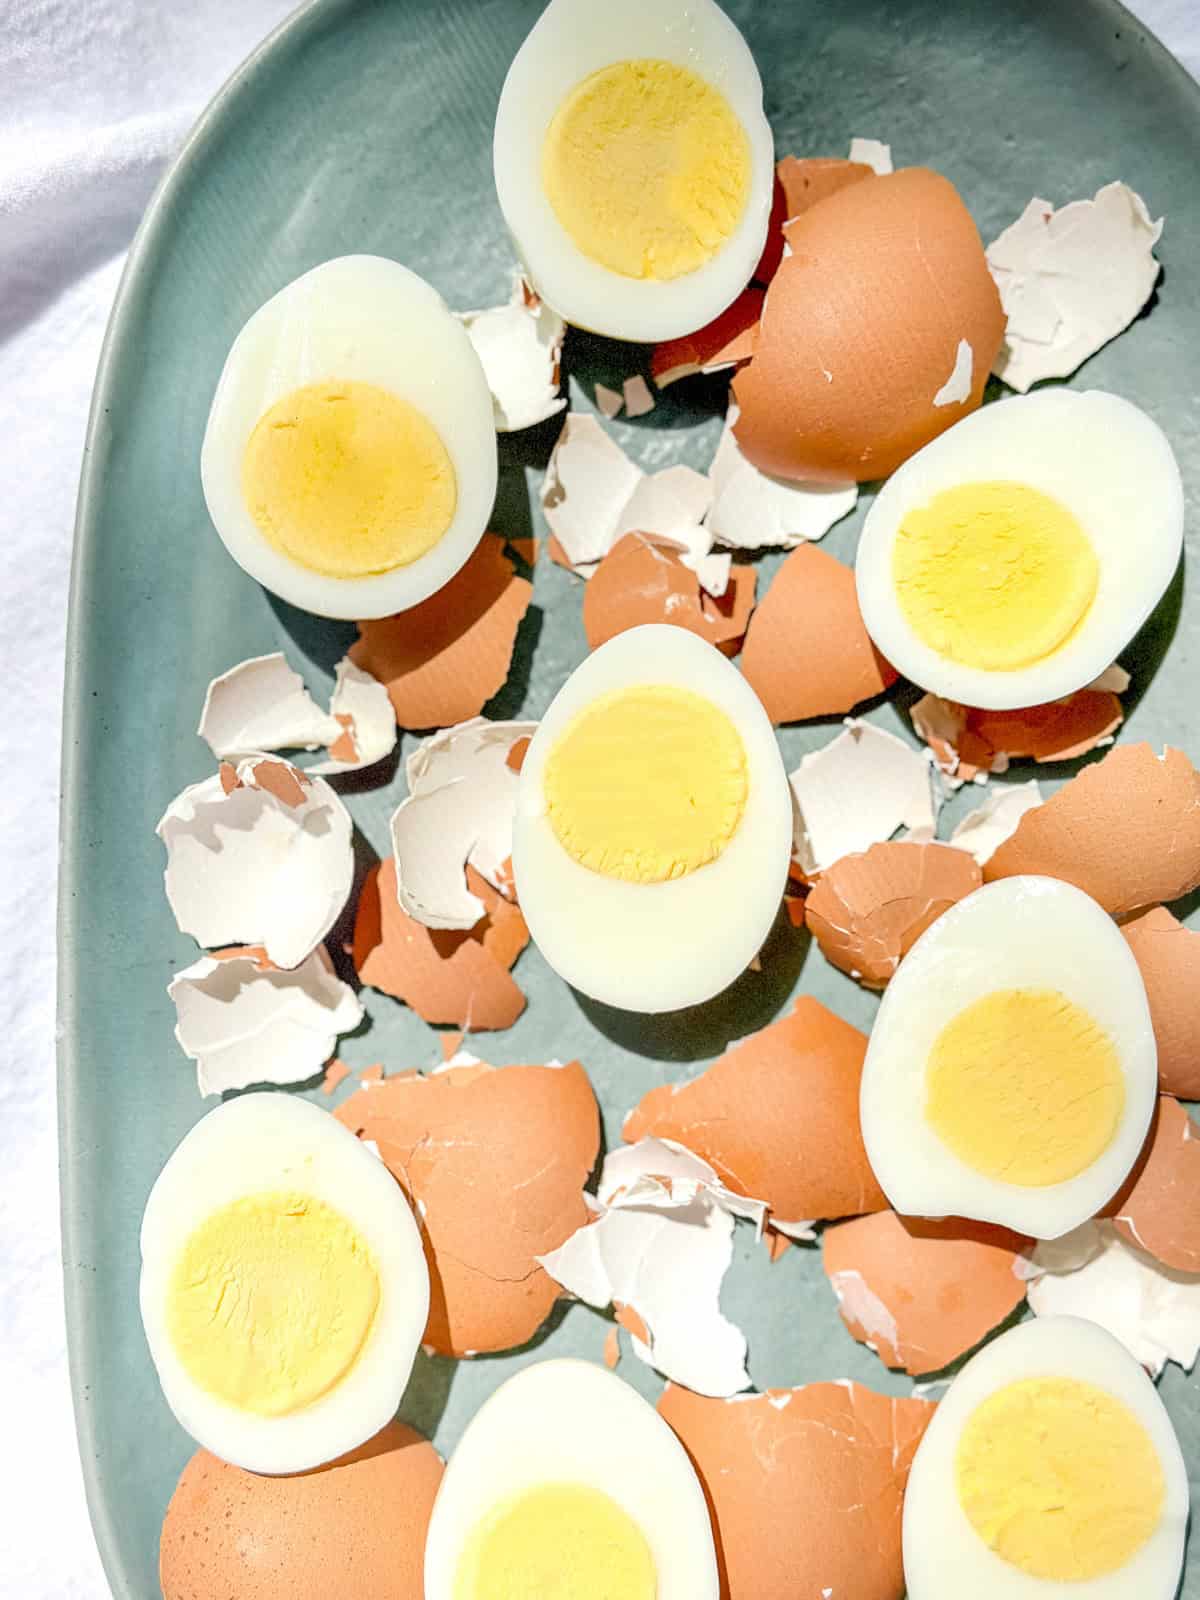 Sliced boiled eggs on green platter with egg shells scattered around them.